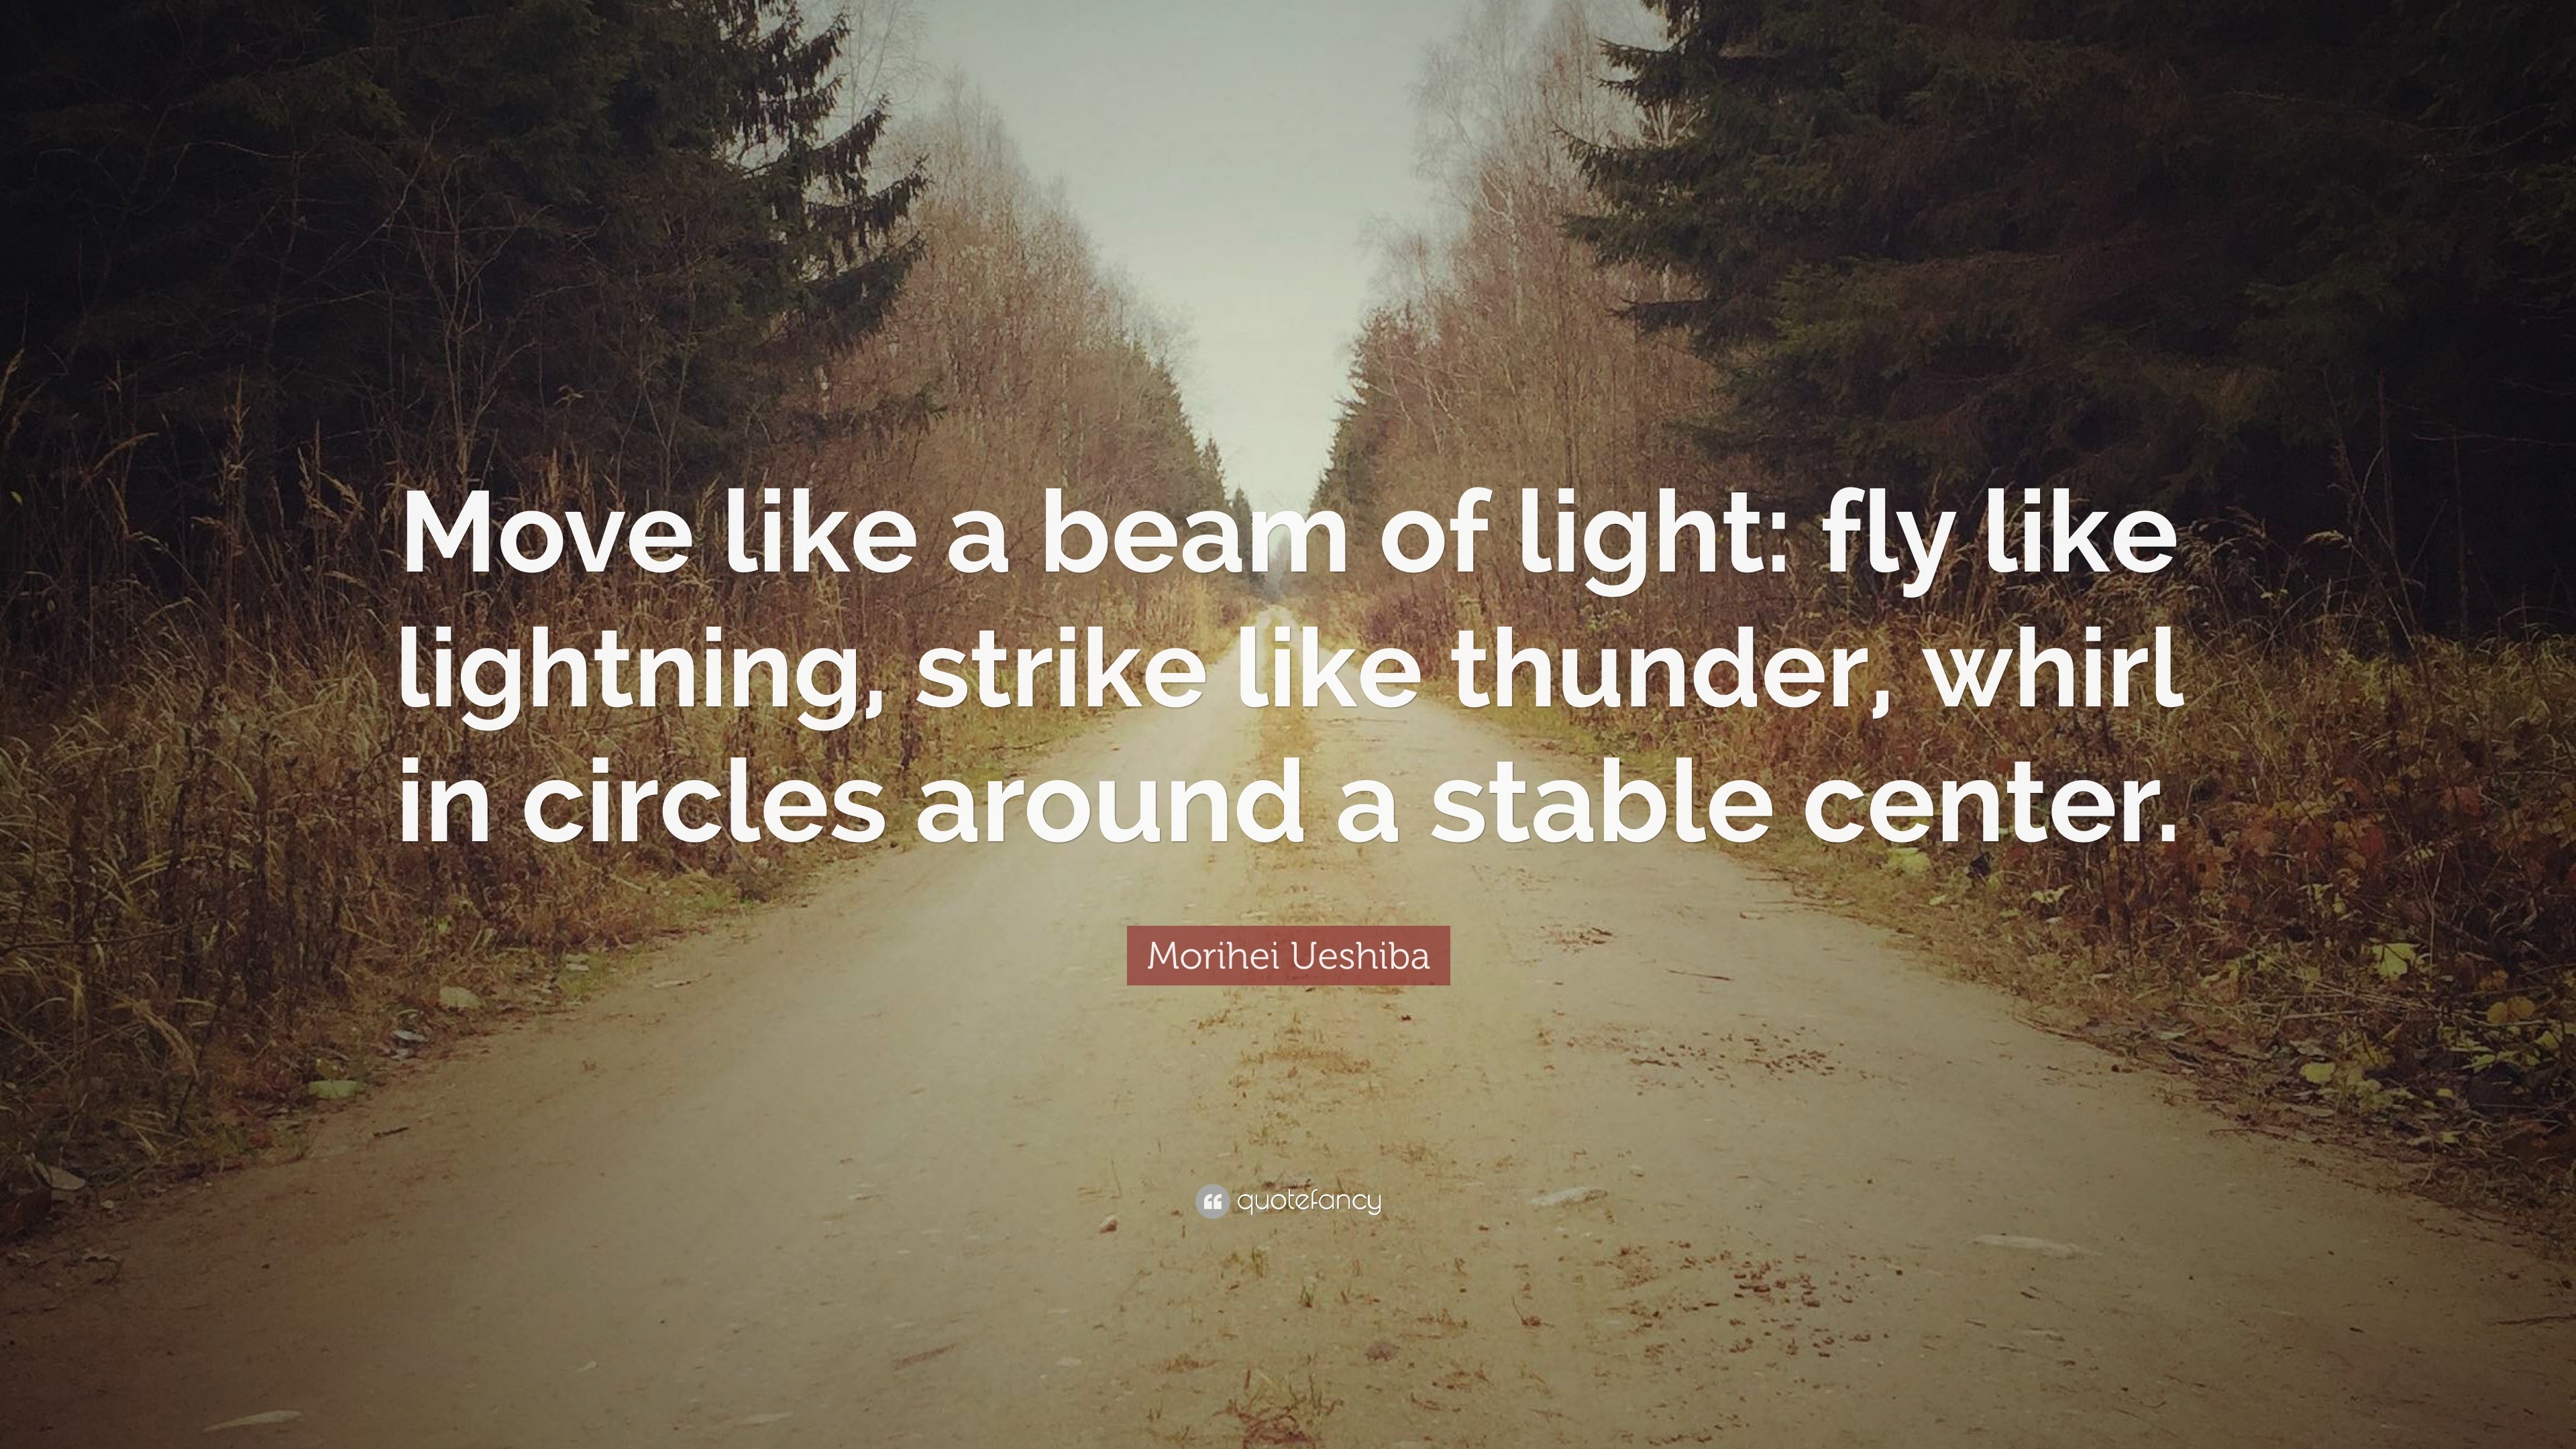 Morihei Ueshiba Quote: “Move like a beam of light: fly like lightning, strike  like thunder, whirl